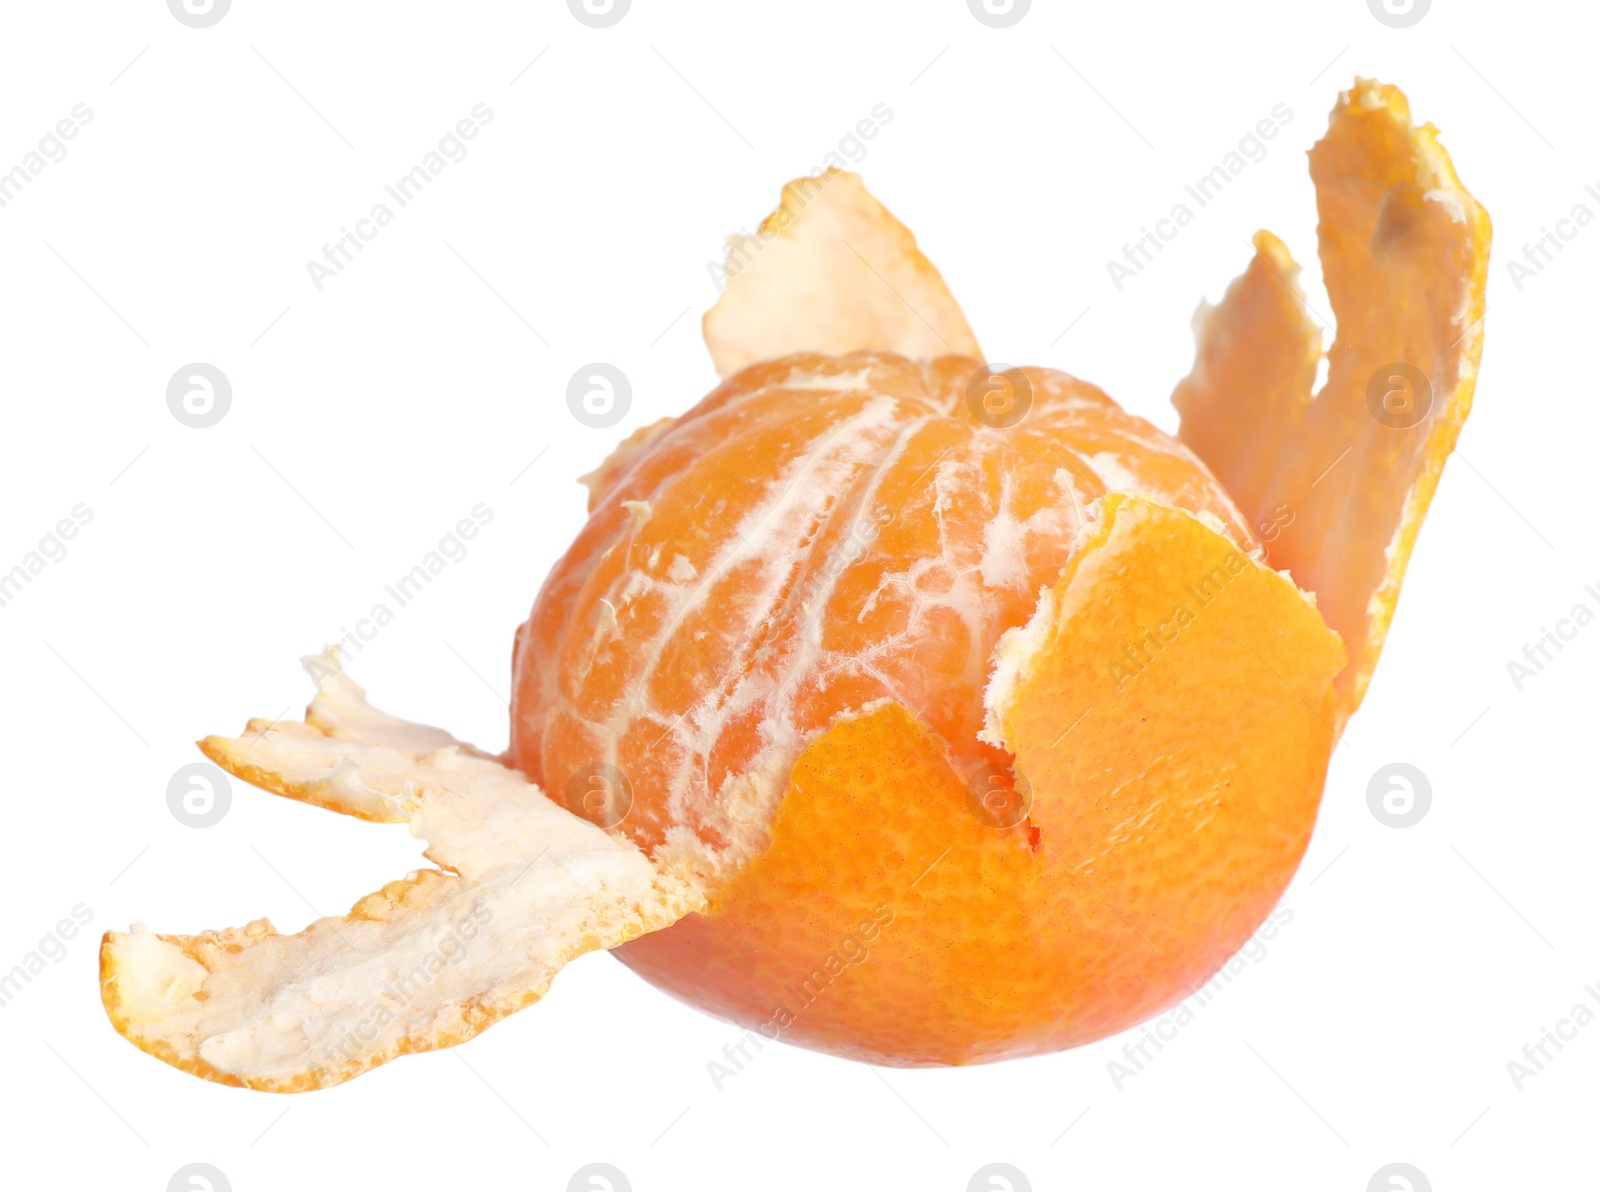 Photo of One fresh ripe tangerine isolated on white